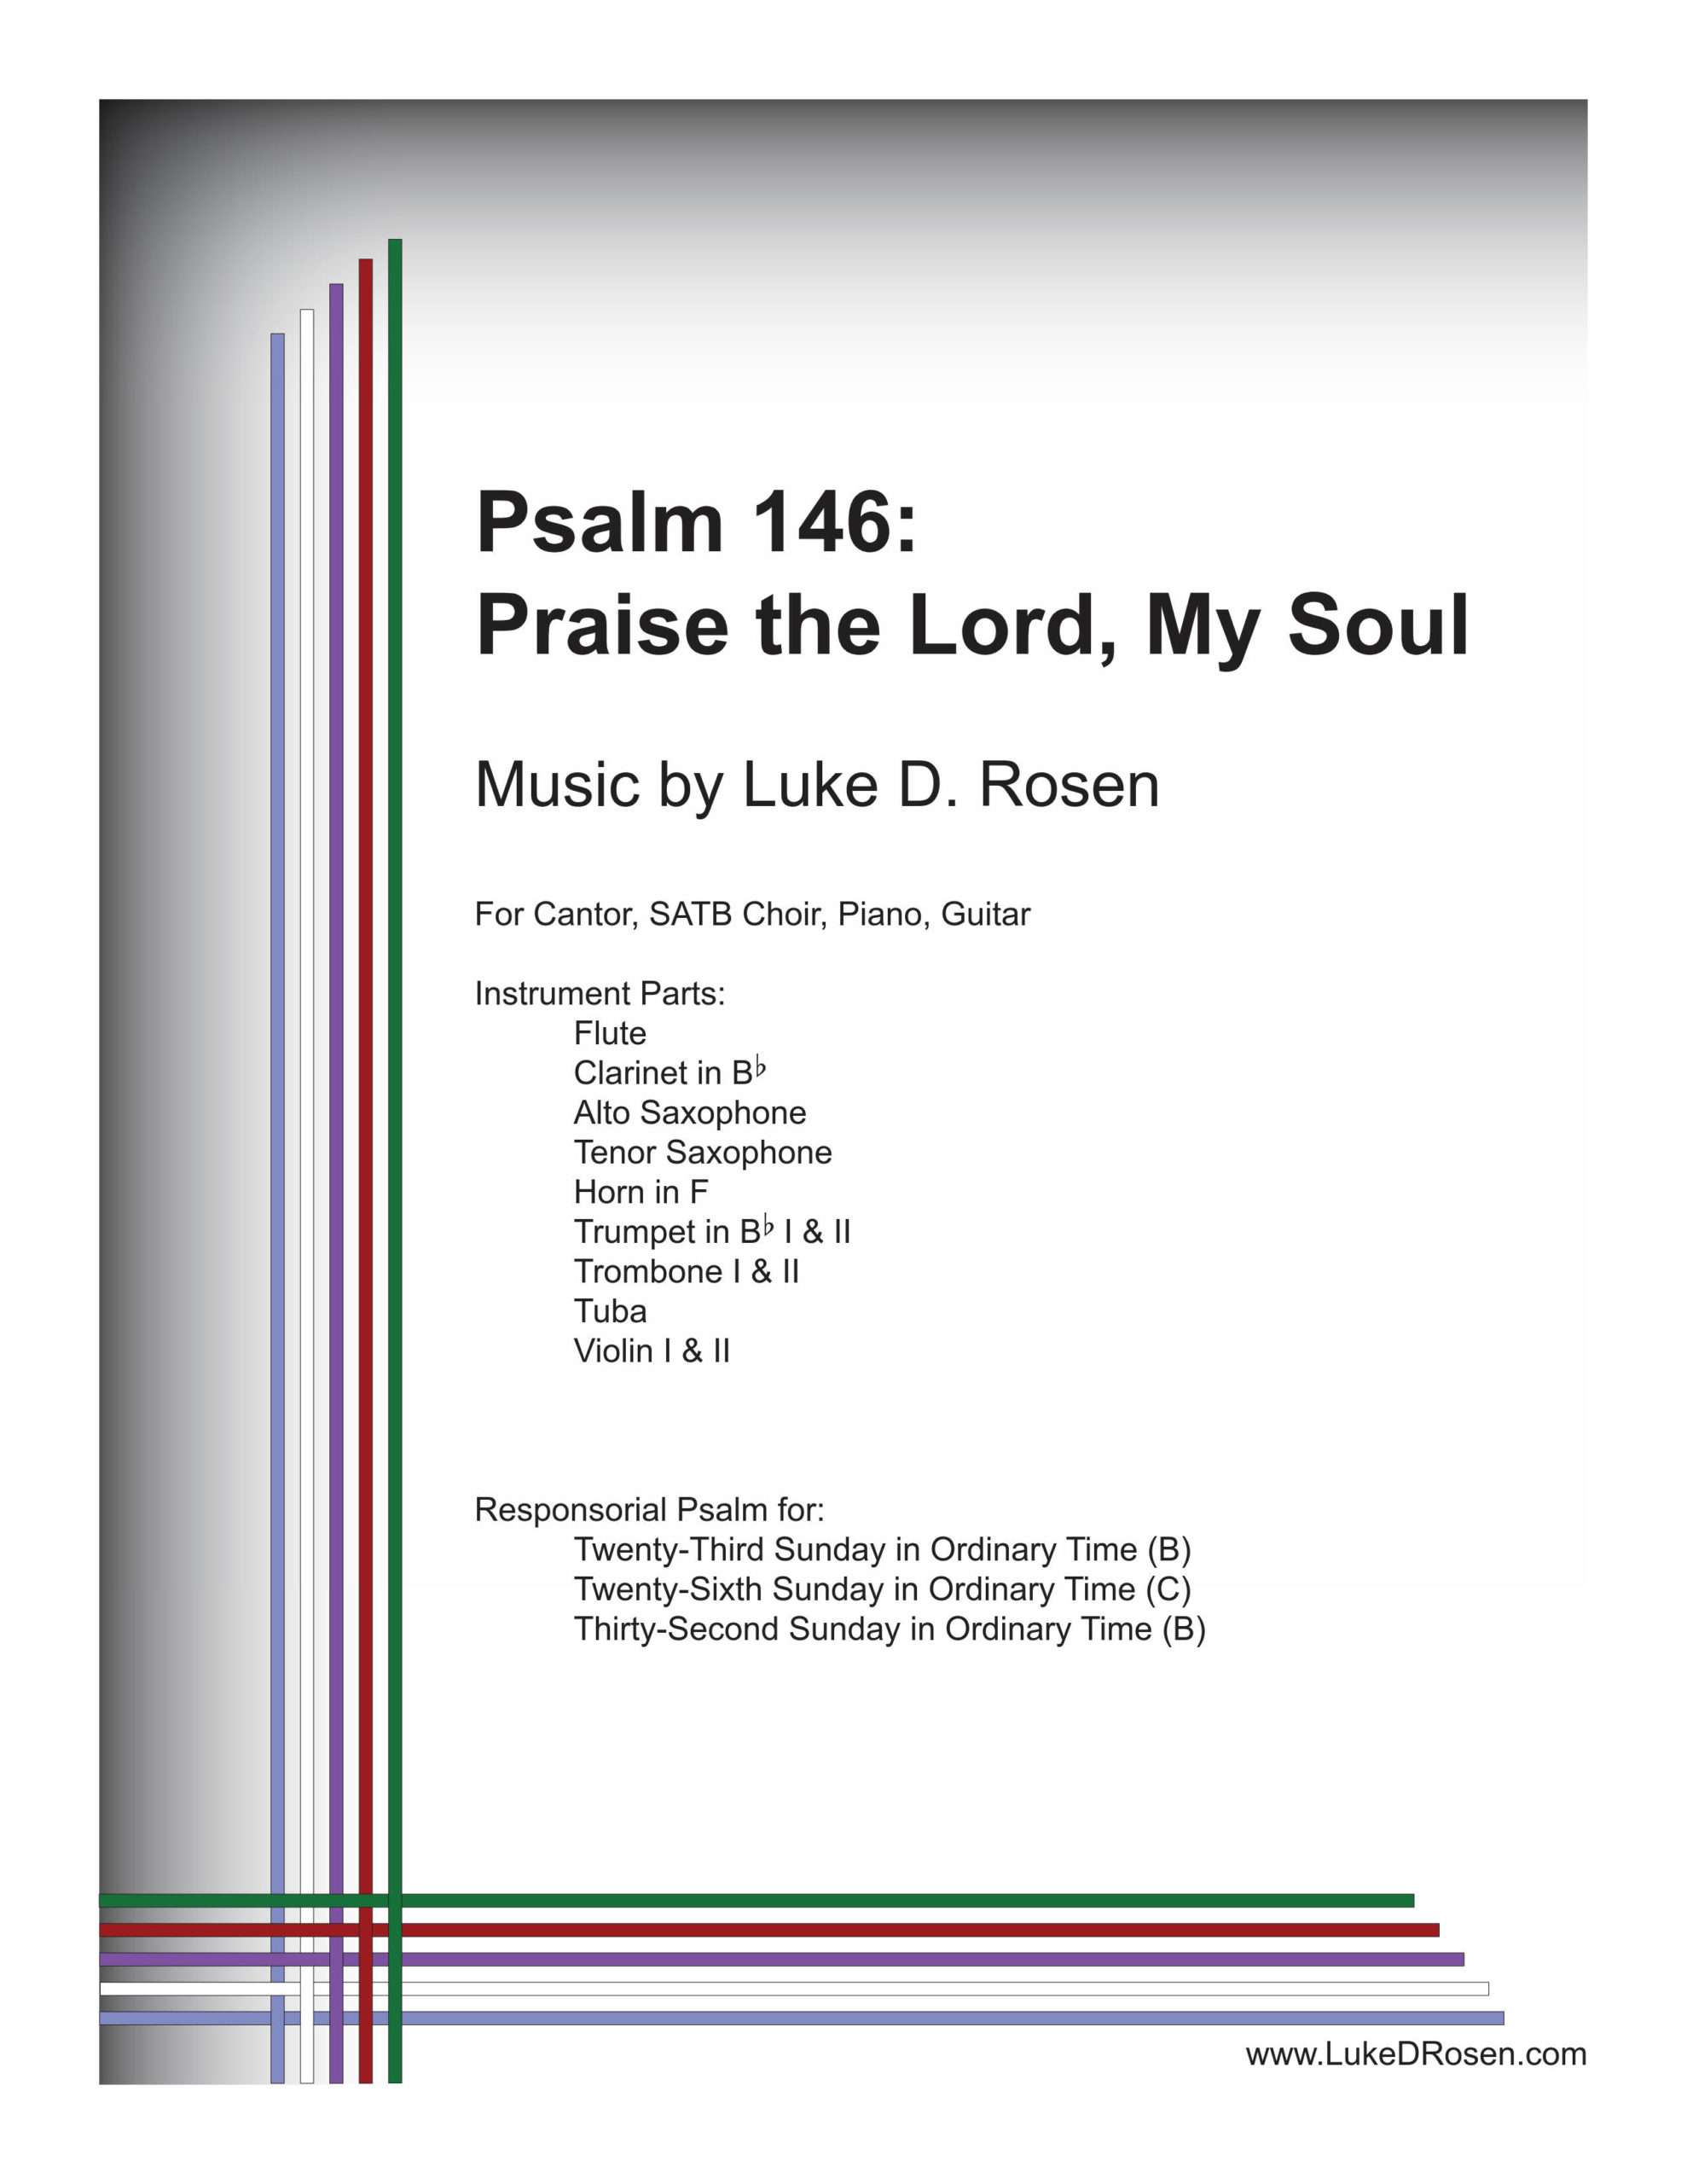 Psalm 146 – Praise the Lord, My Soul (Rosen)